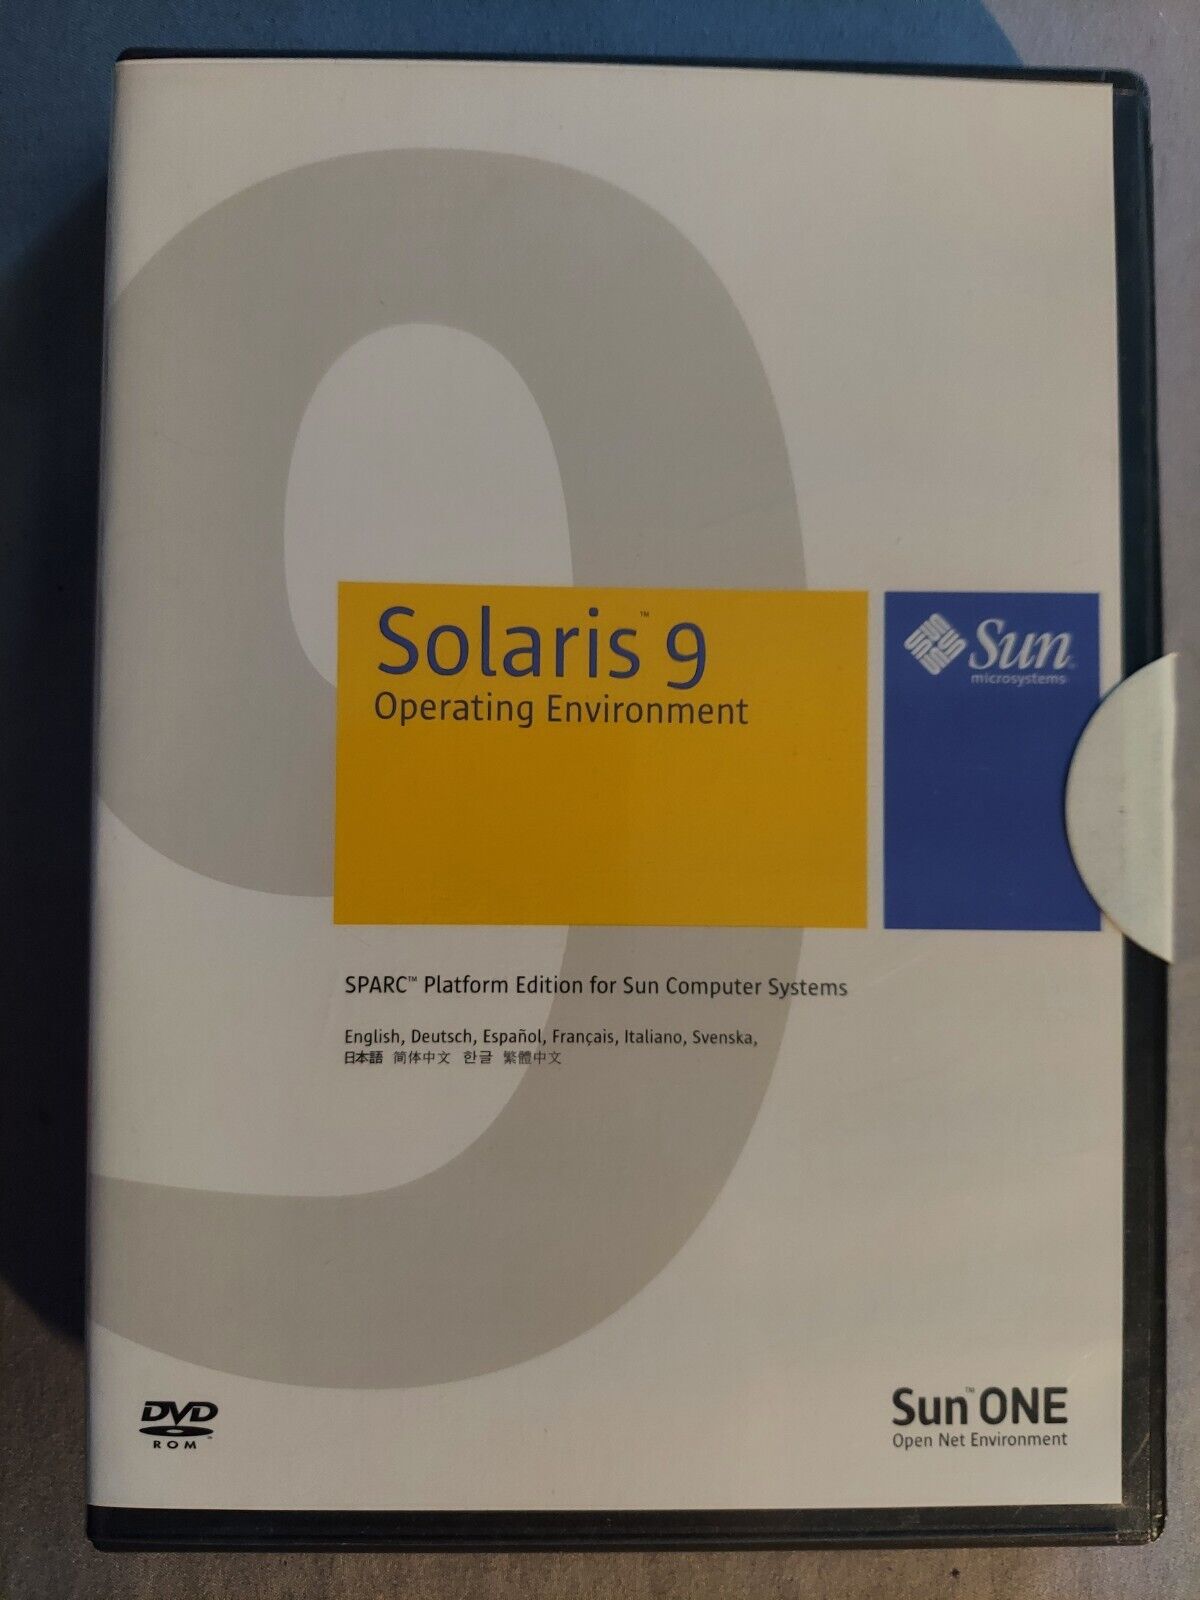 Sun OS Solaris 9 Operating Environment System SPARC Platform Edition DVD-ROM